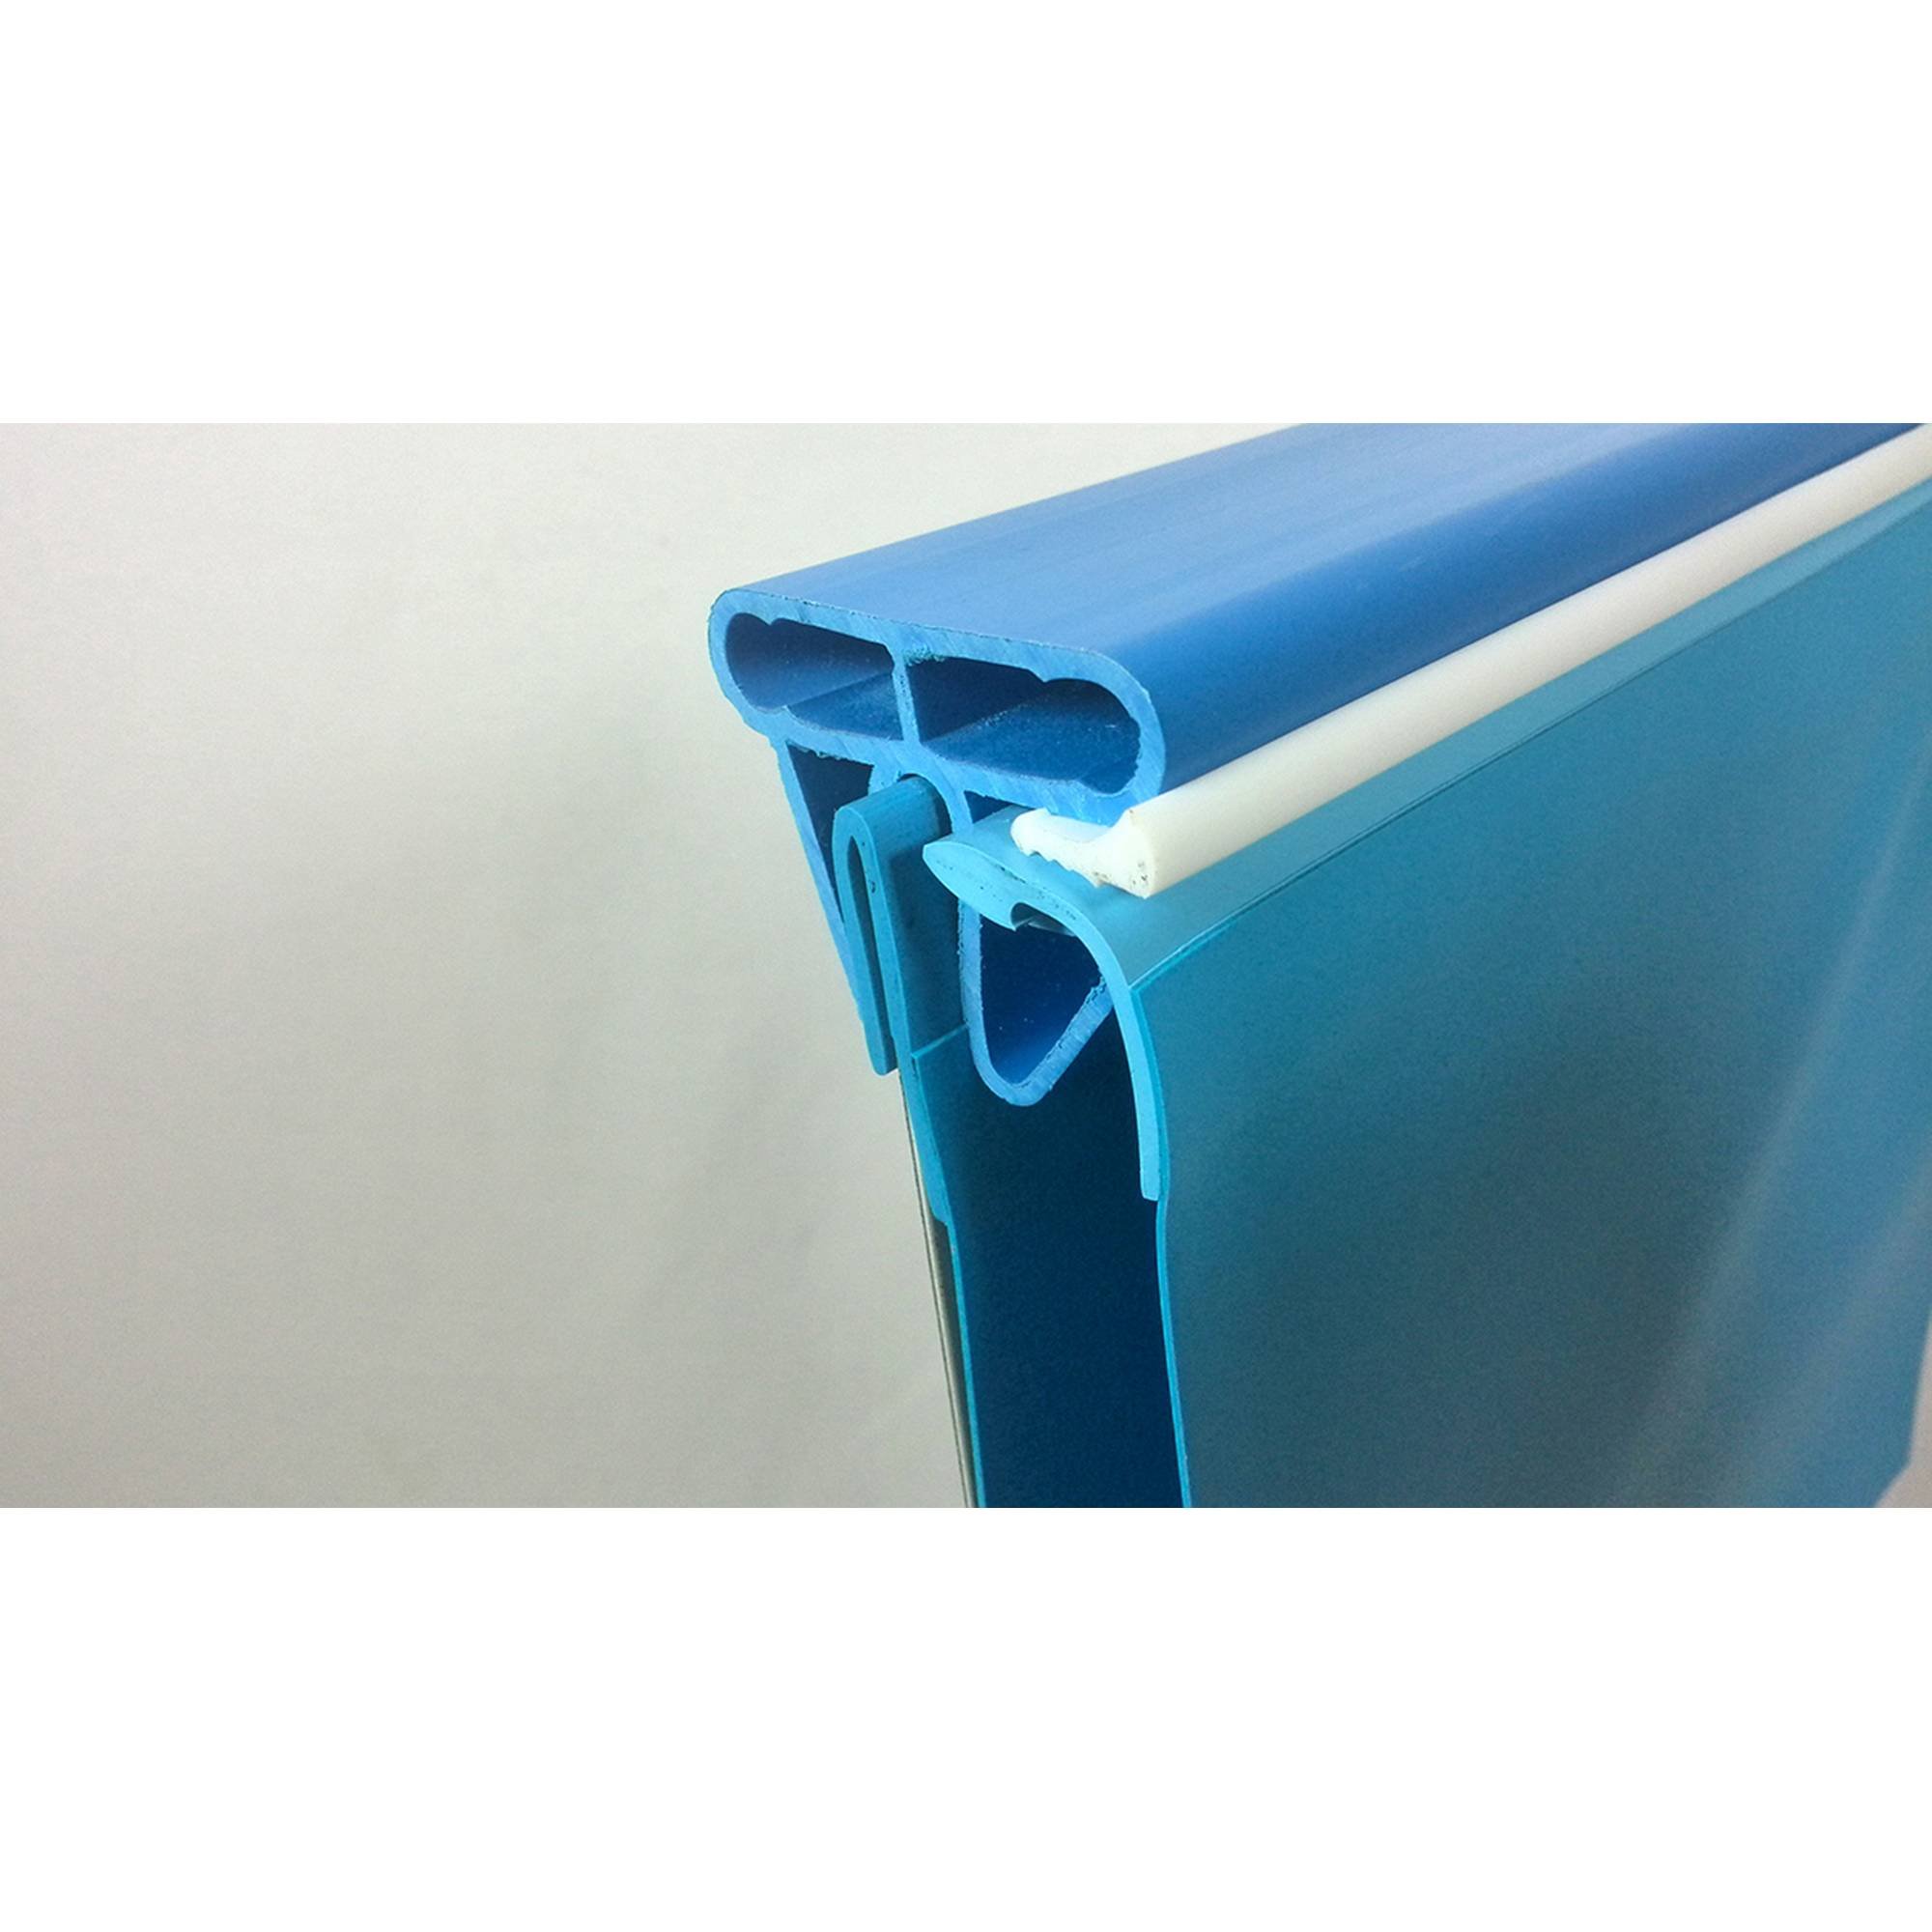 Stahlwandpool oval Exklusiv 525x320x150 cm, Stahl 0,8 mm weiß, Folie 0,6 mm blau, Einhängebiese